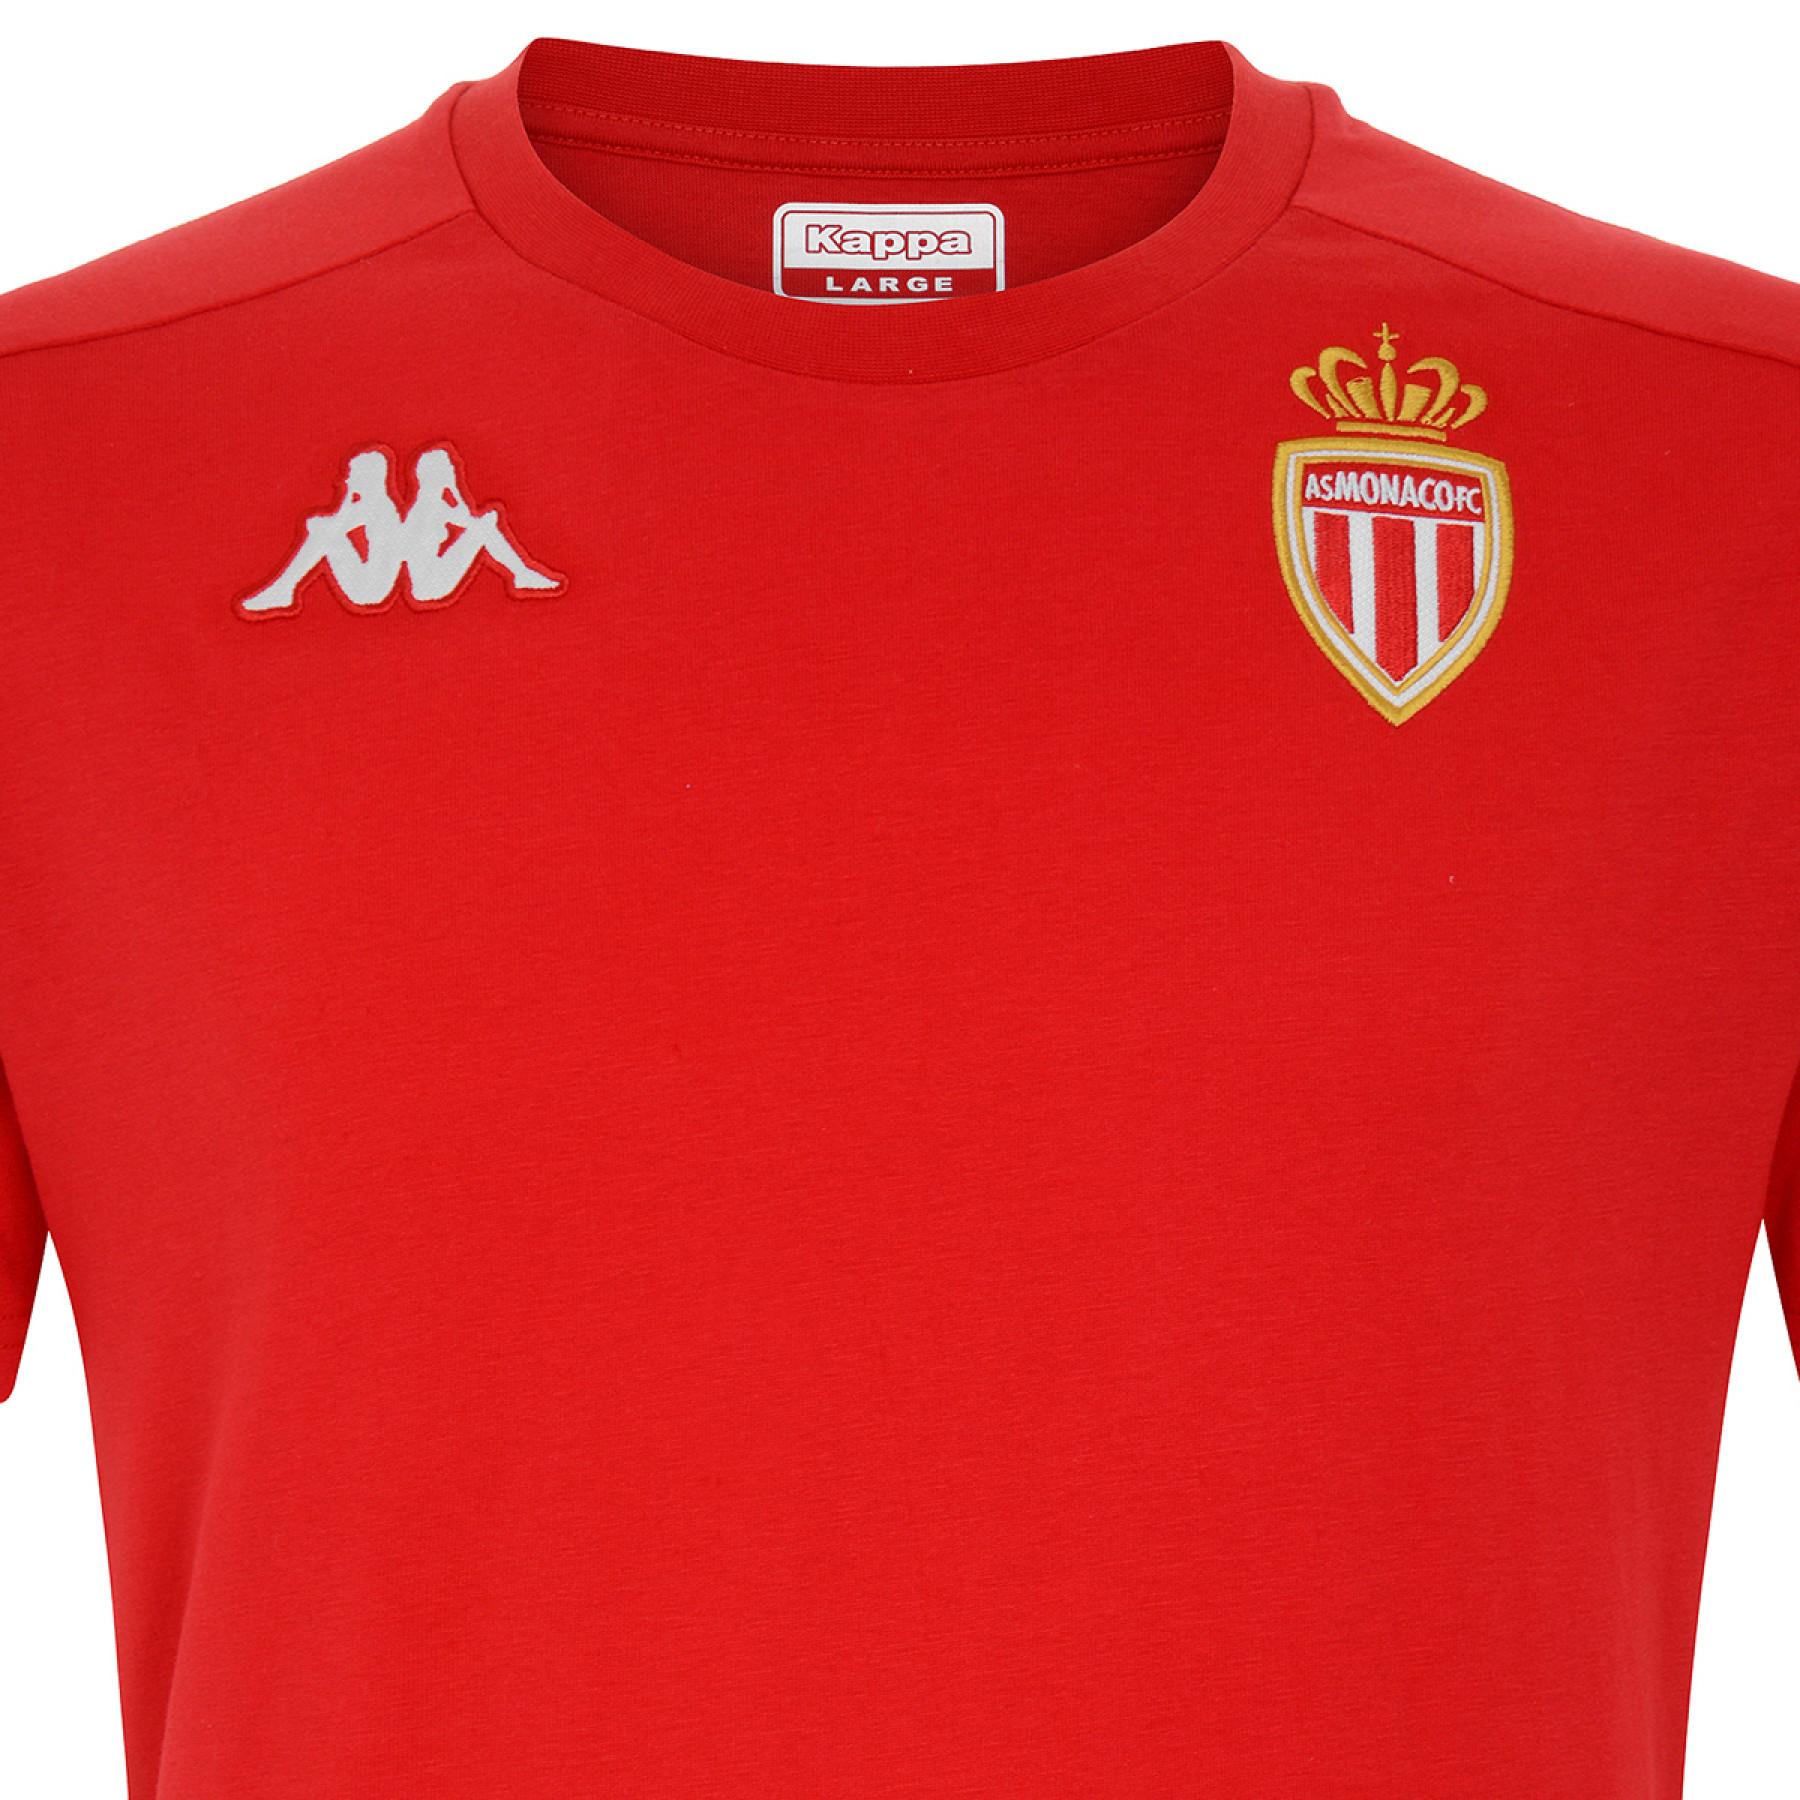 Kinder-T-Shirt AS Monaco 2020/21 ayba 4